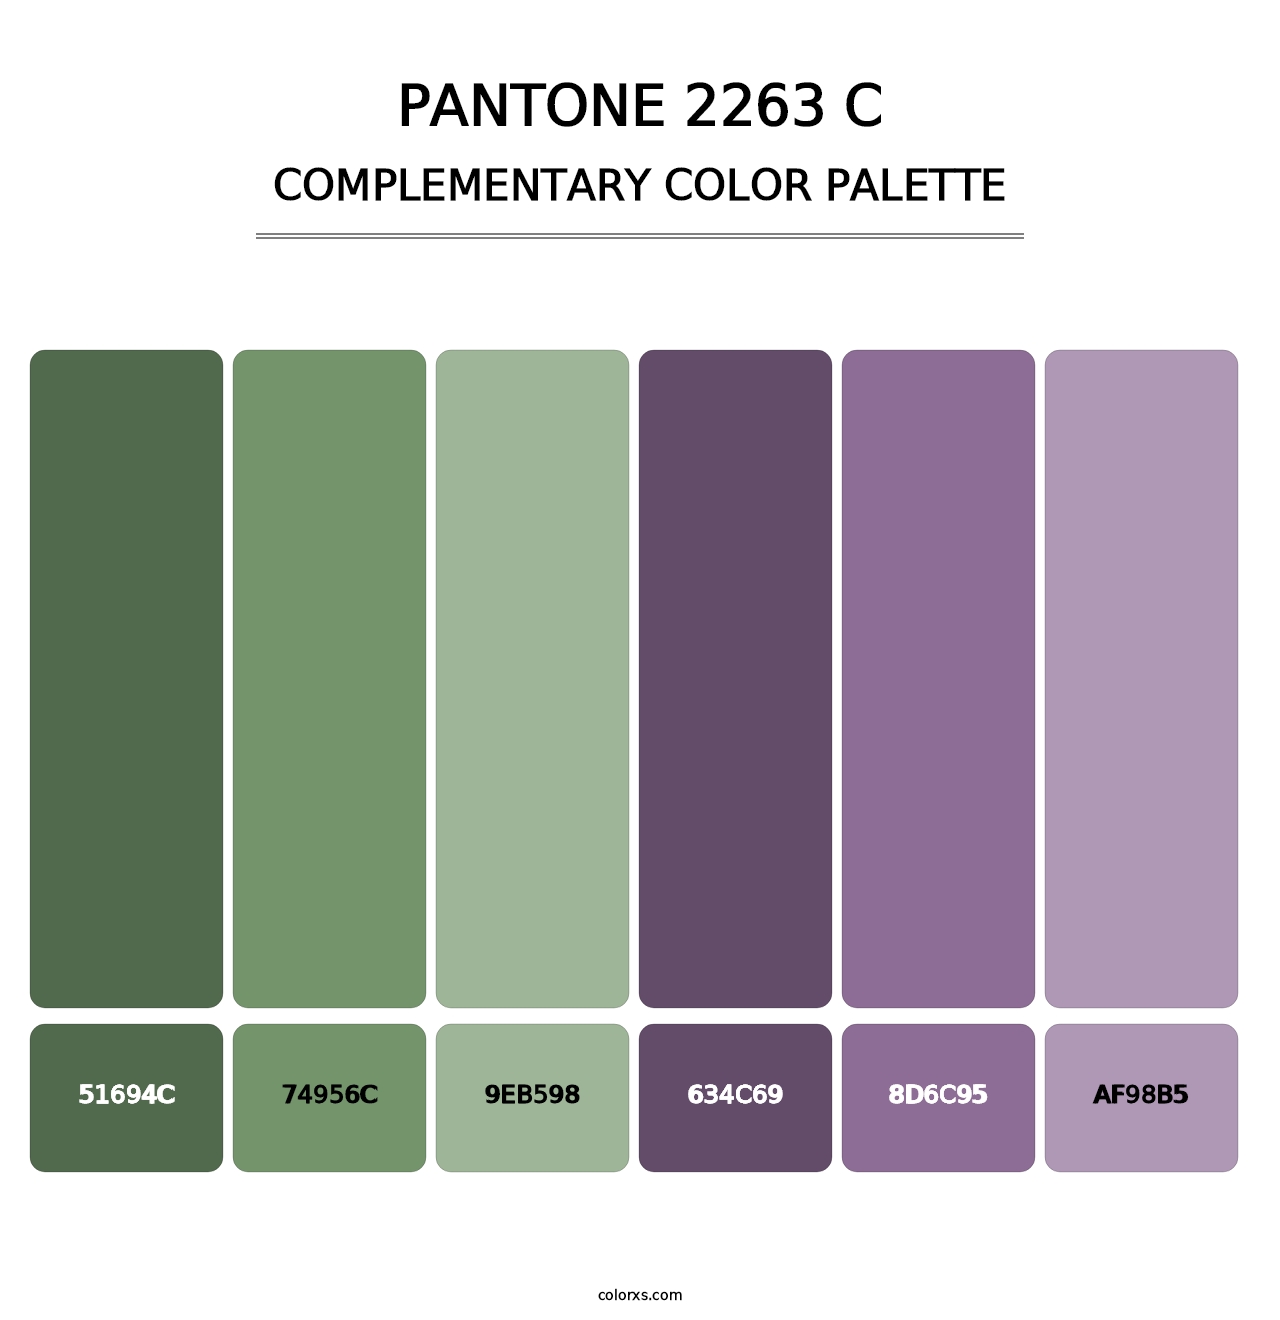 PANTONE 2263 C - Complementary Color Palette